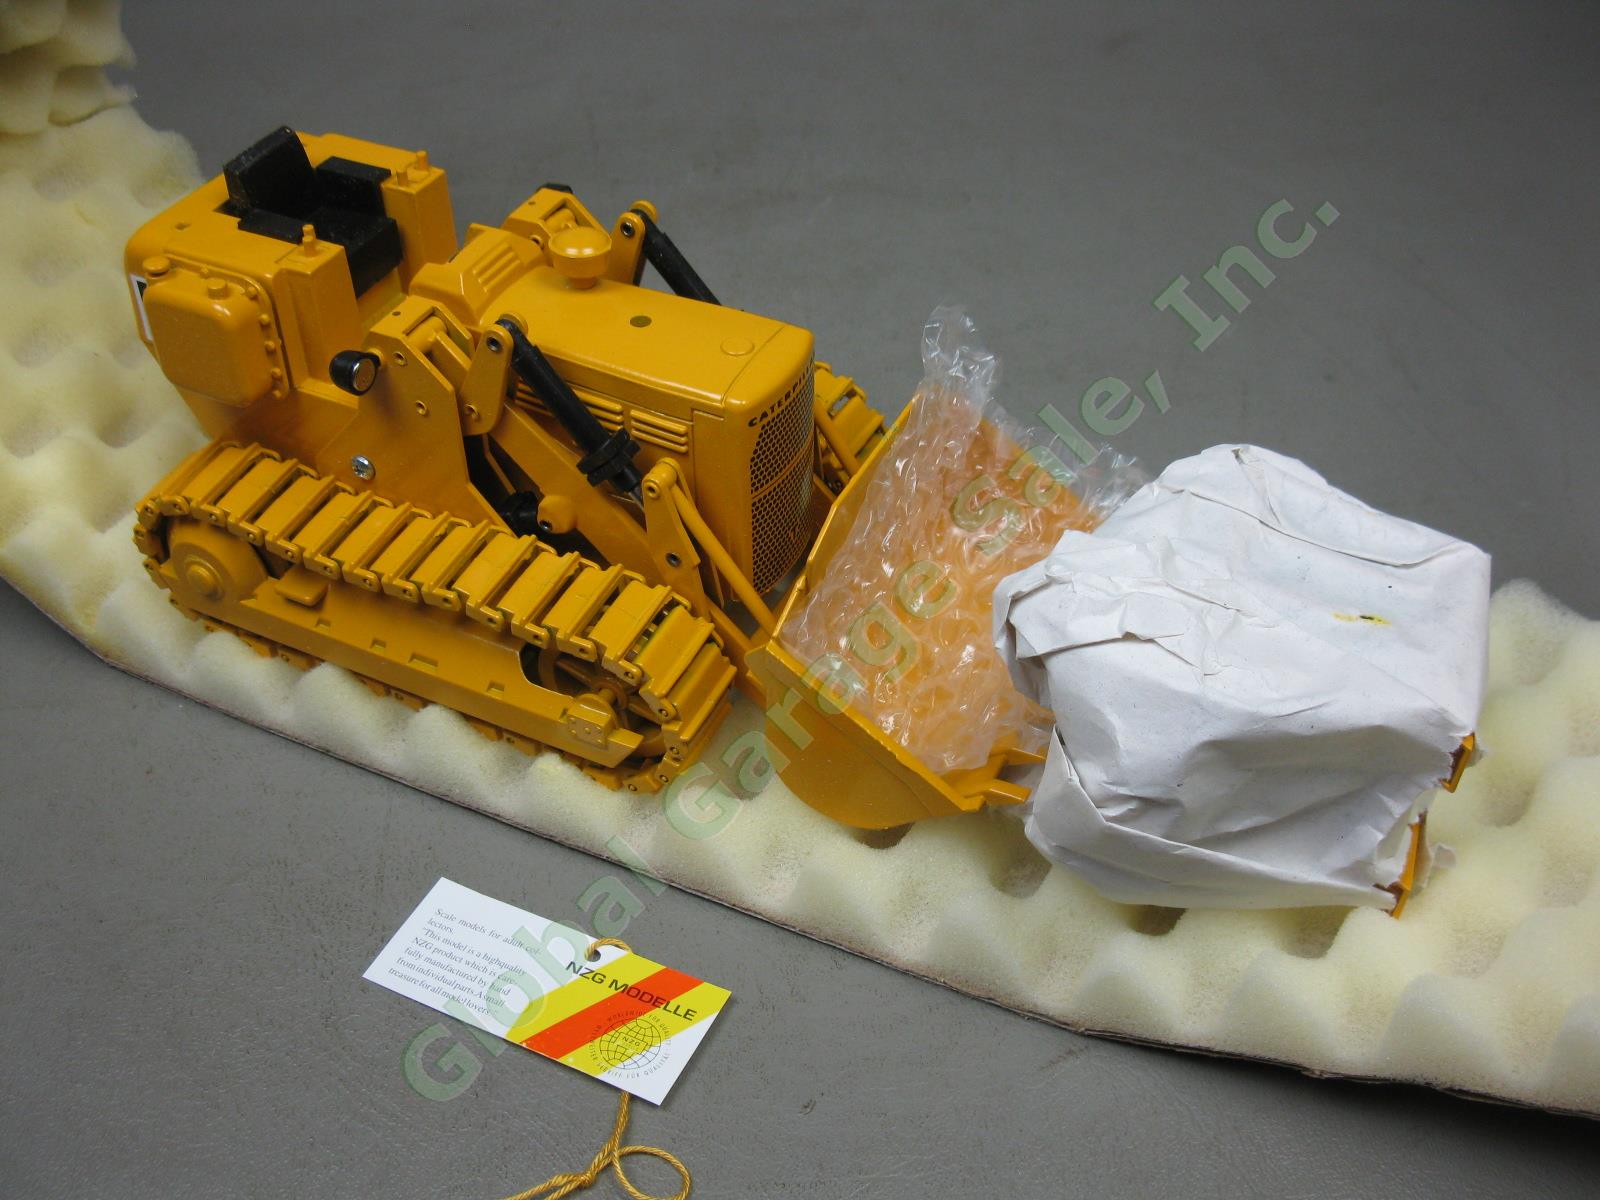 NZG Caterpillar CAT 941 Special Edition 1:24 Kettenlader Track-Type Loader #0921 4